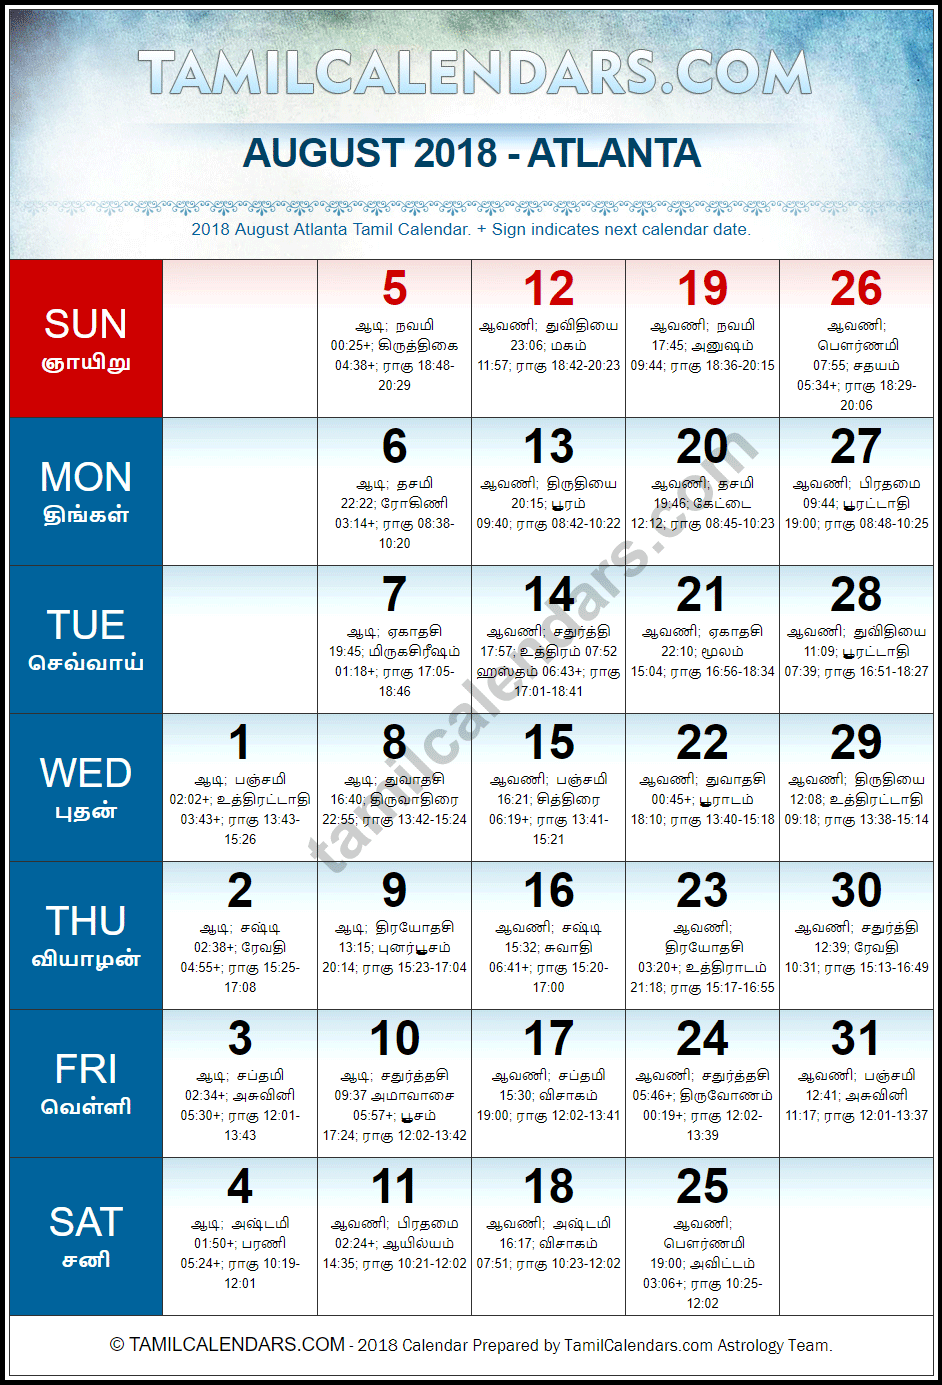 August 2018 Tamil Calendar for Atlanta, USA